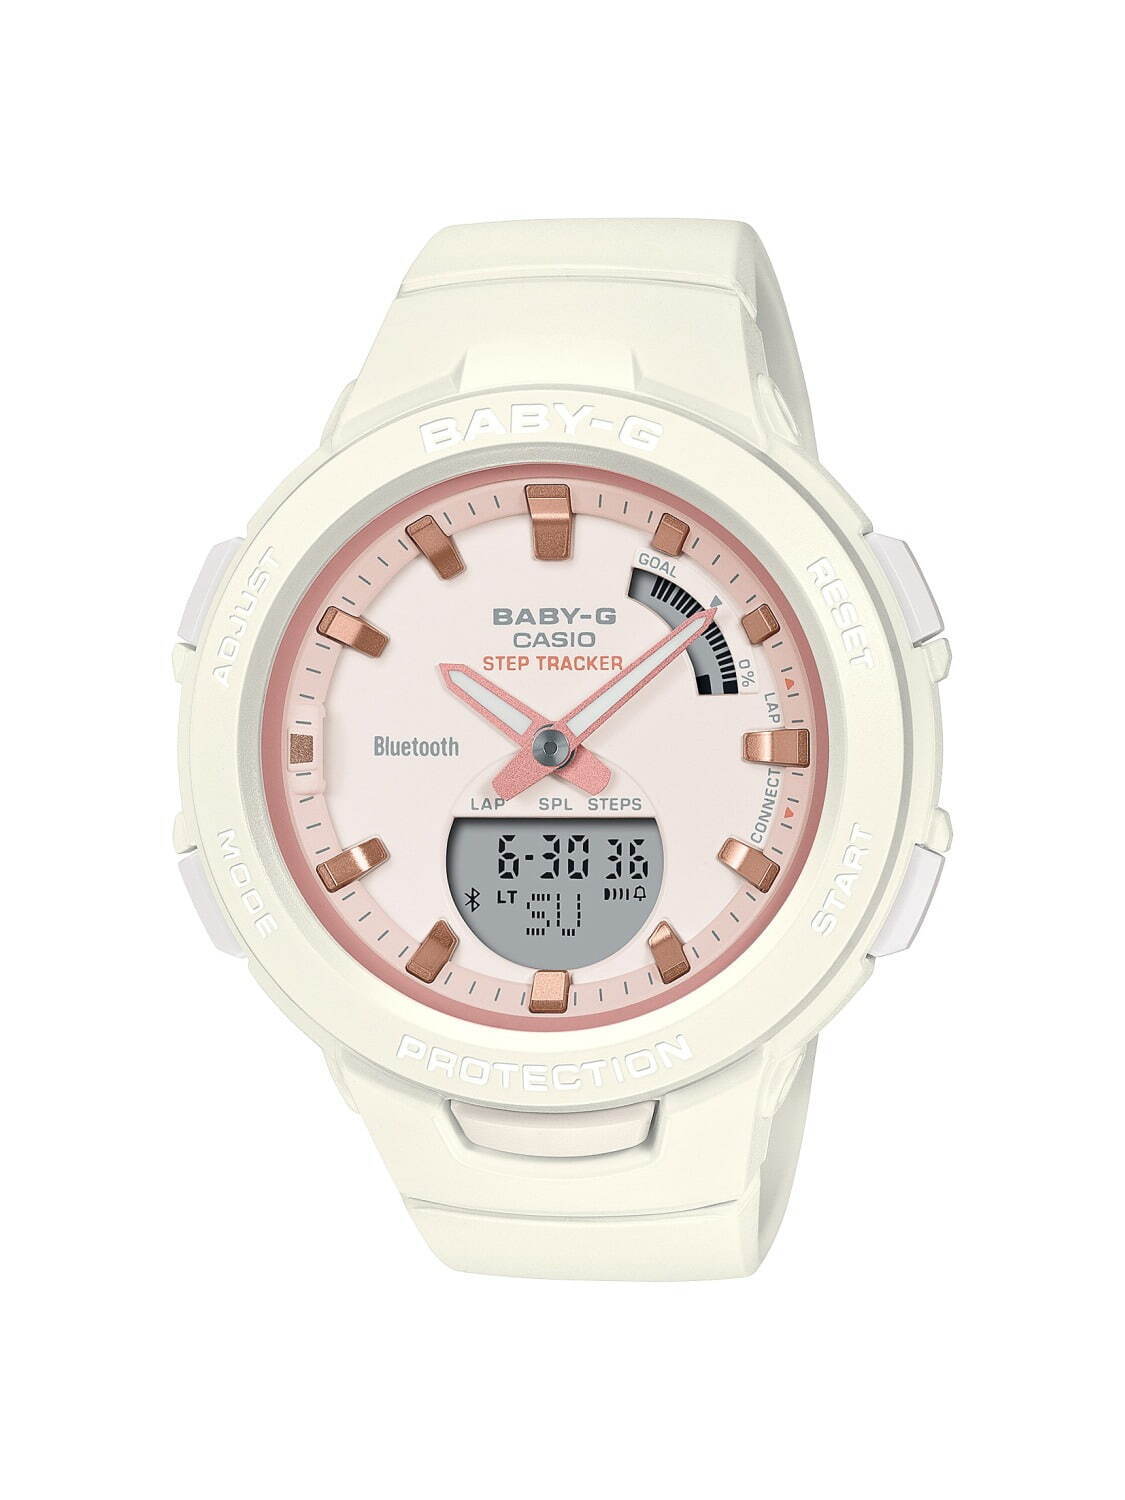 Baby-G CASIO Baby-G 腕時計 レディース bsa-b100cs-7adr カシオ ベビーG スマートフォンリンクシリーズ SMARTPHONE LINK SERIES クオーツ 液晶/ペールピンクxホワイト アナデジ表示